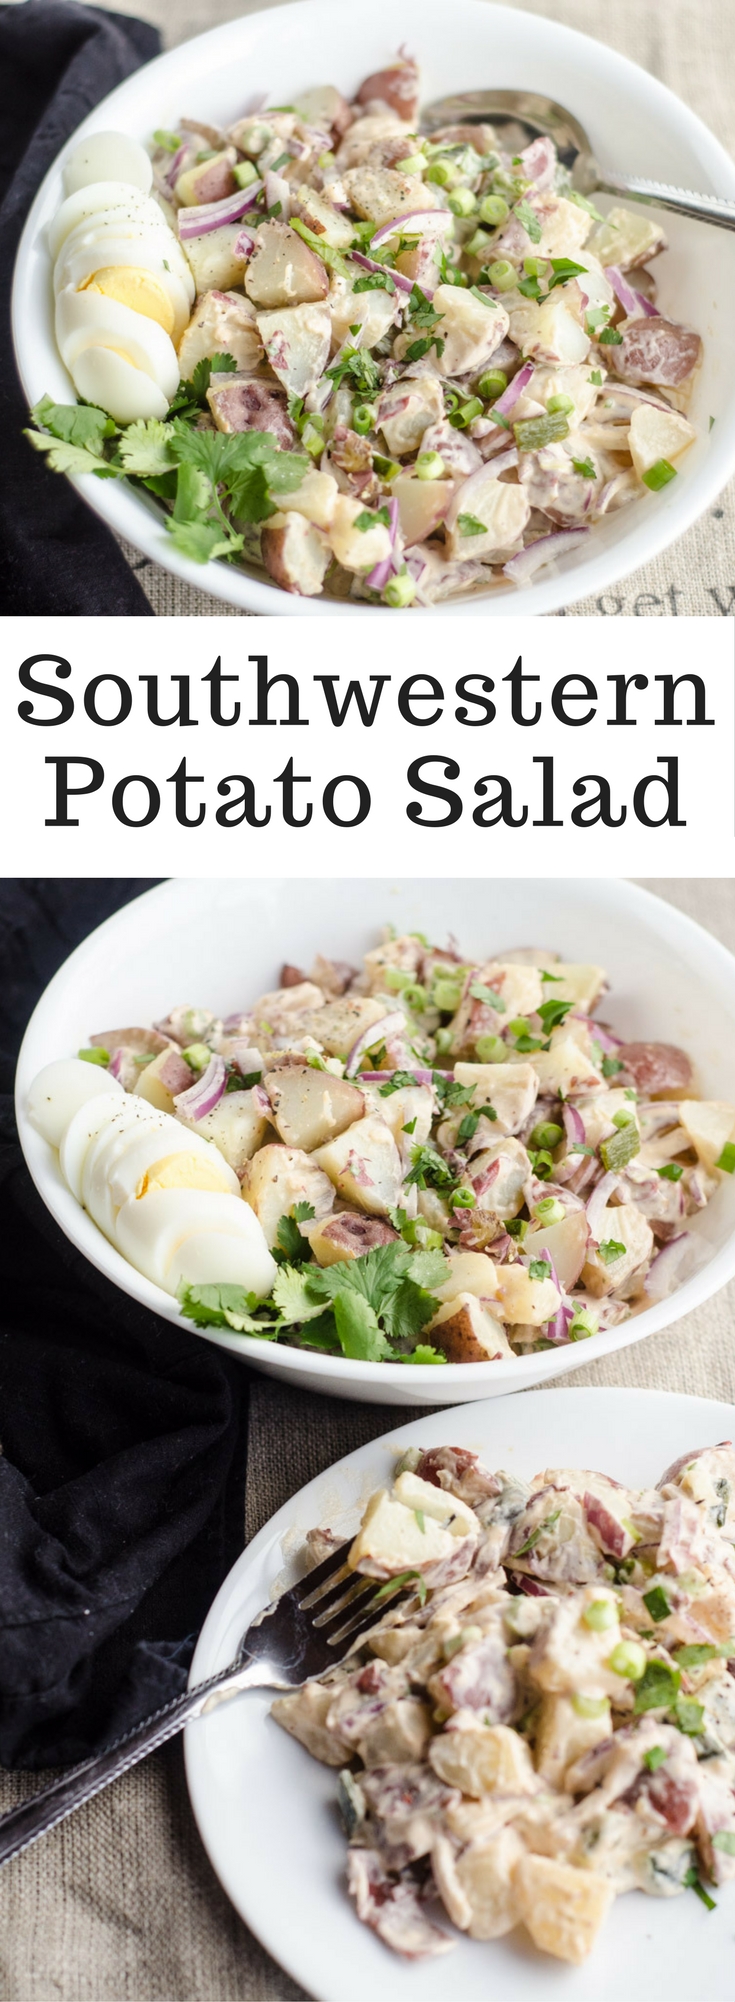 Southwestern Potato Salad - Hello Fun Seekers